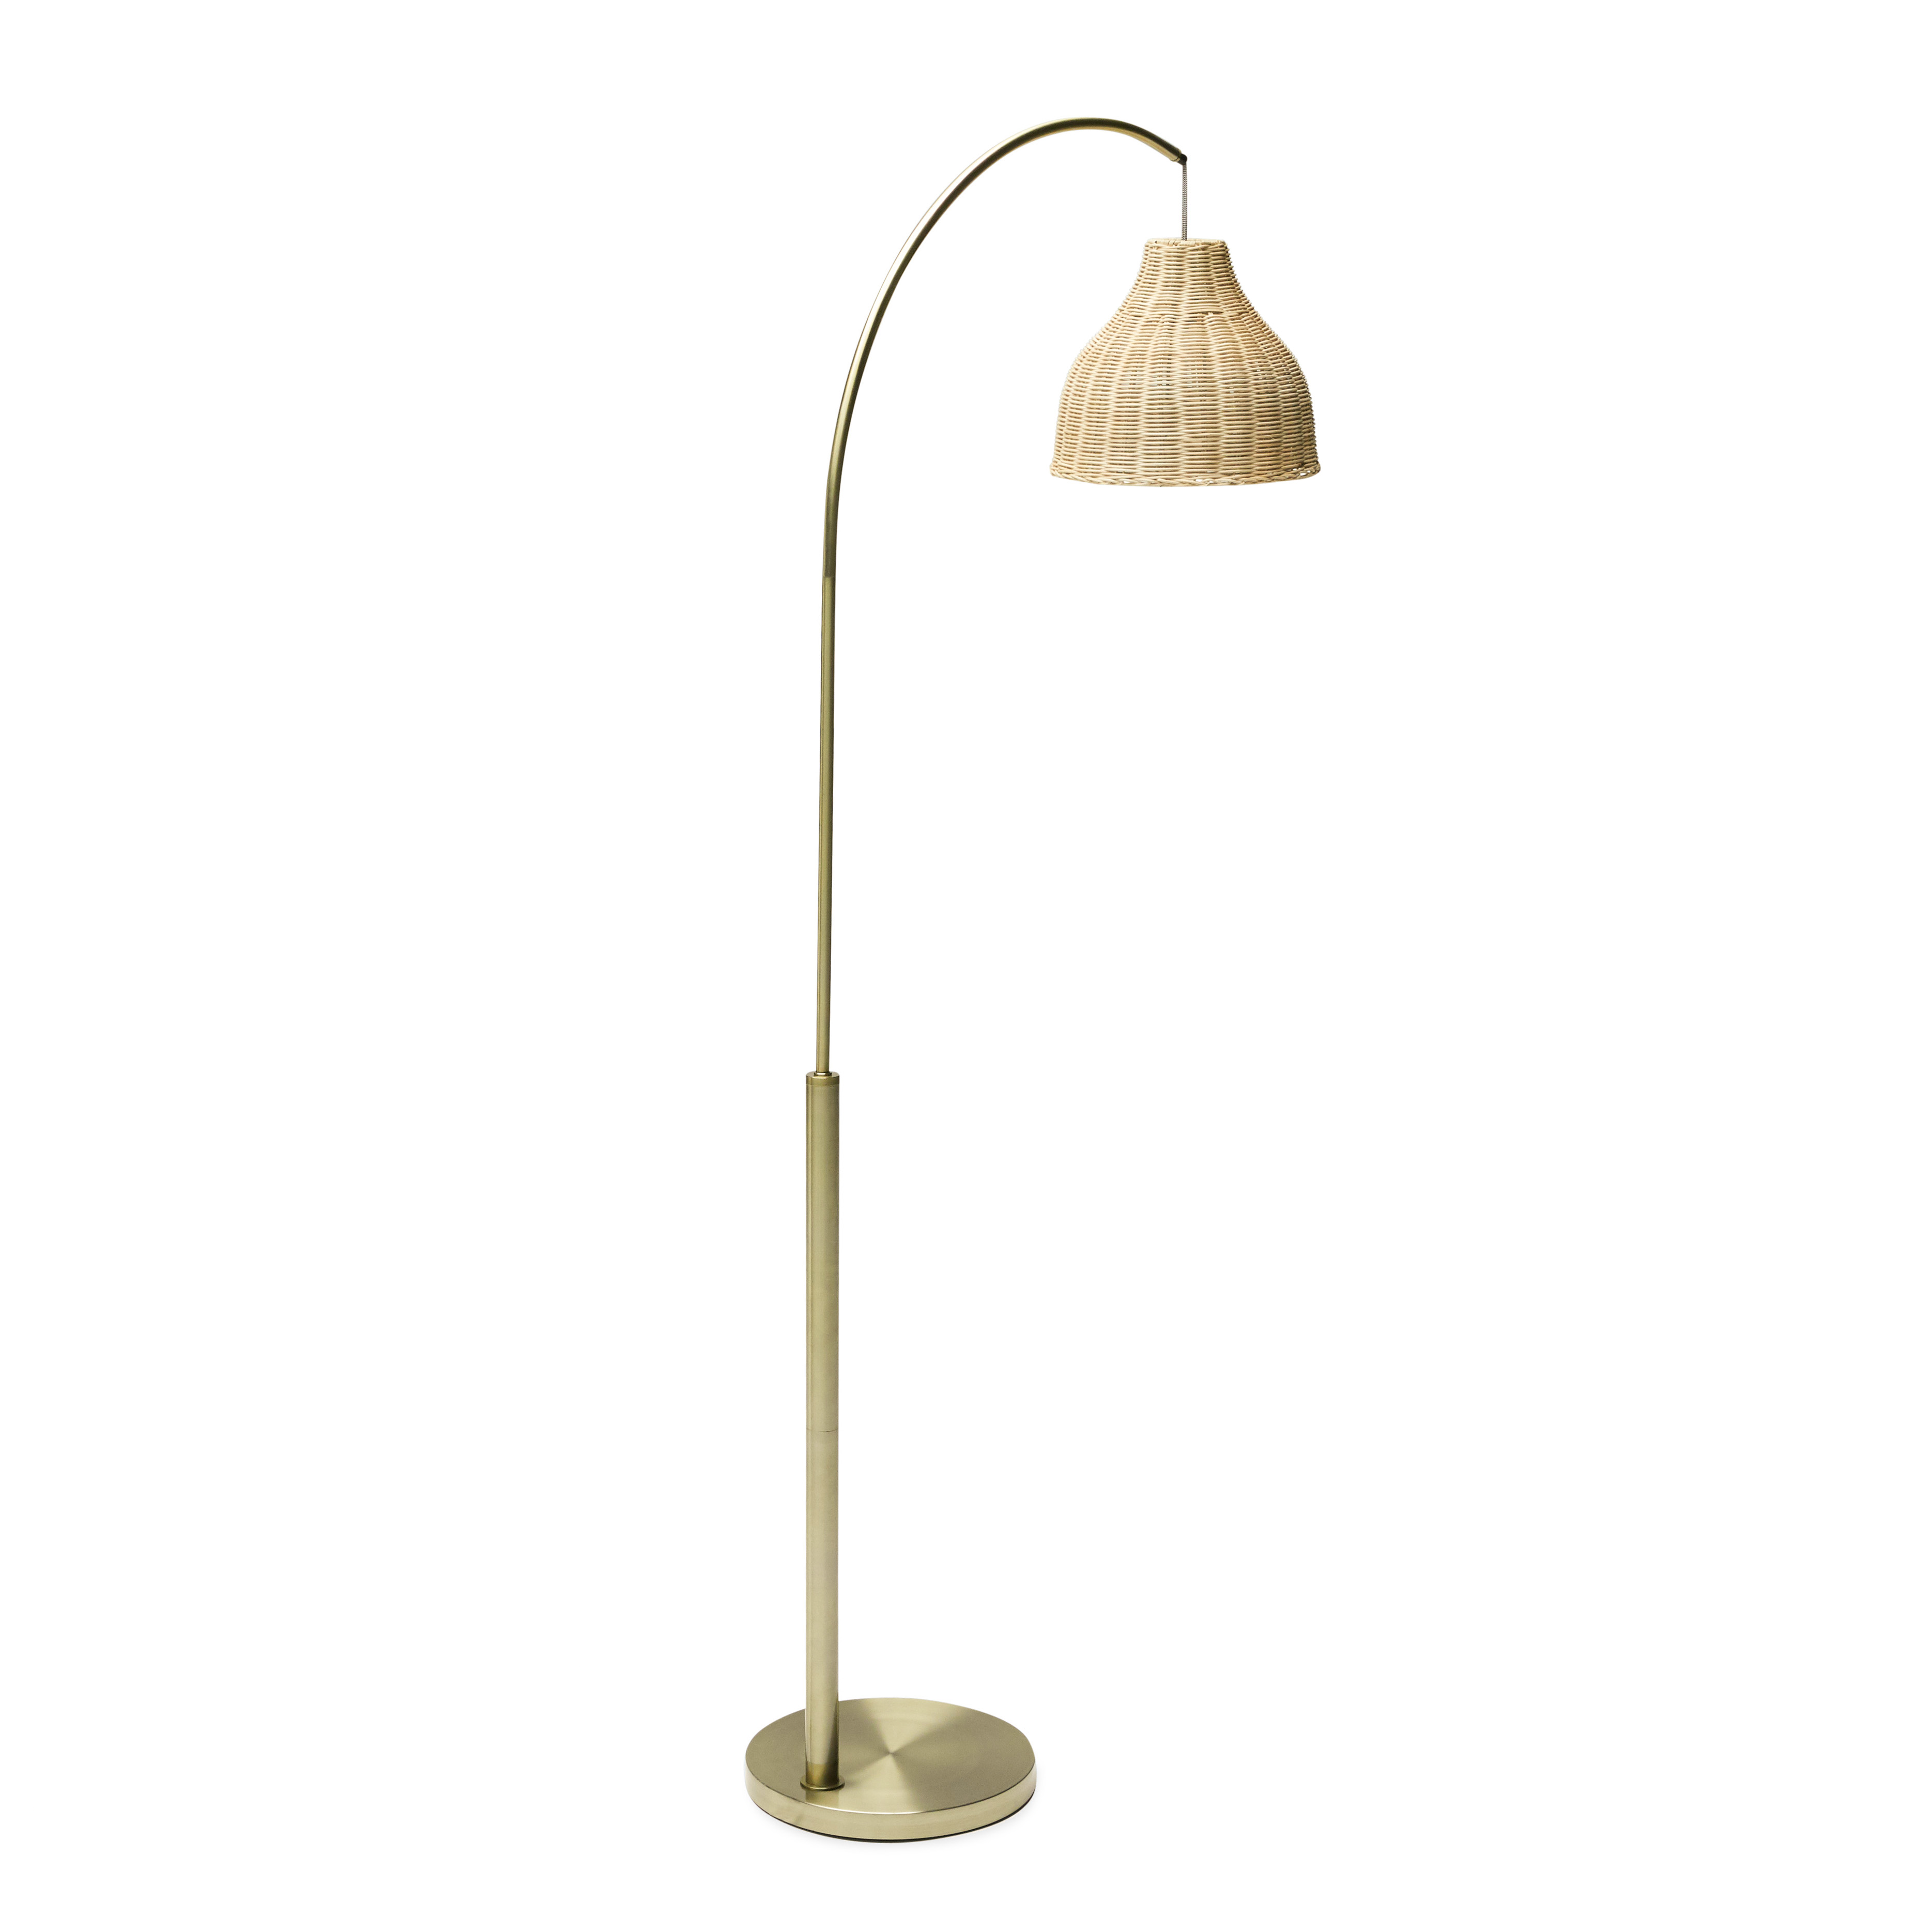 brass-floor-lamp-with-rattan-shade - Katie Considers